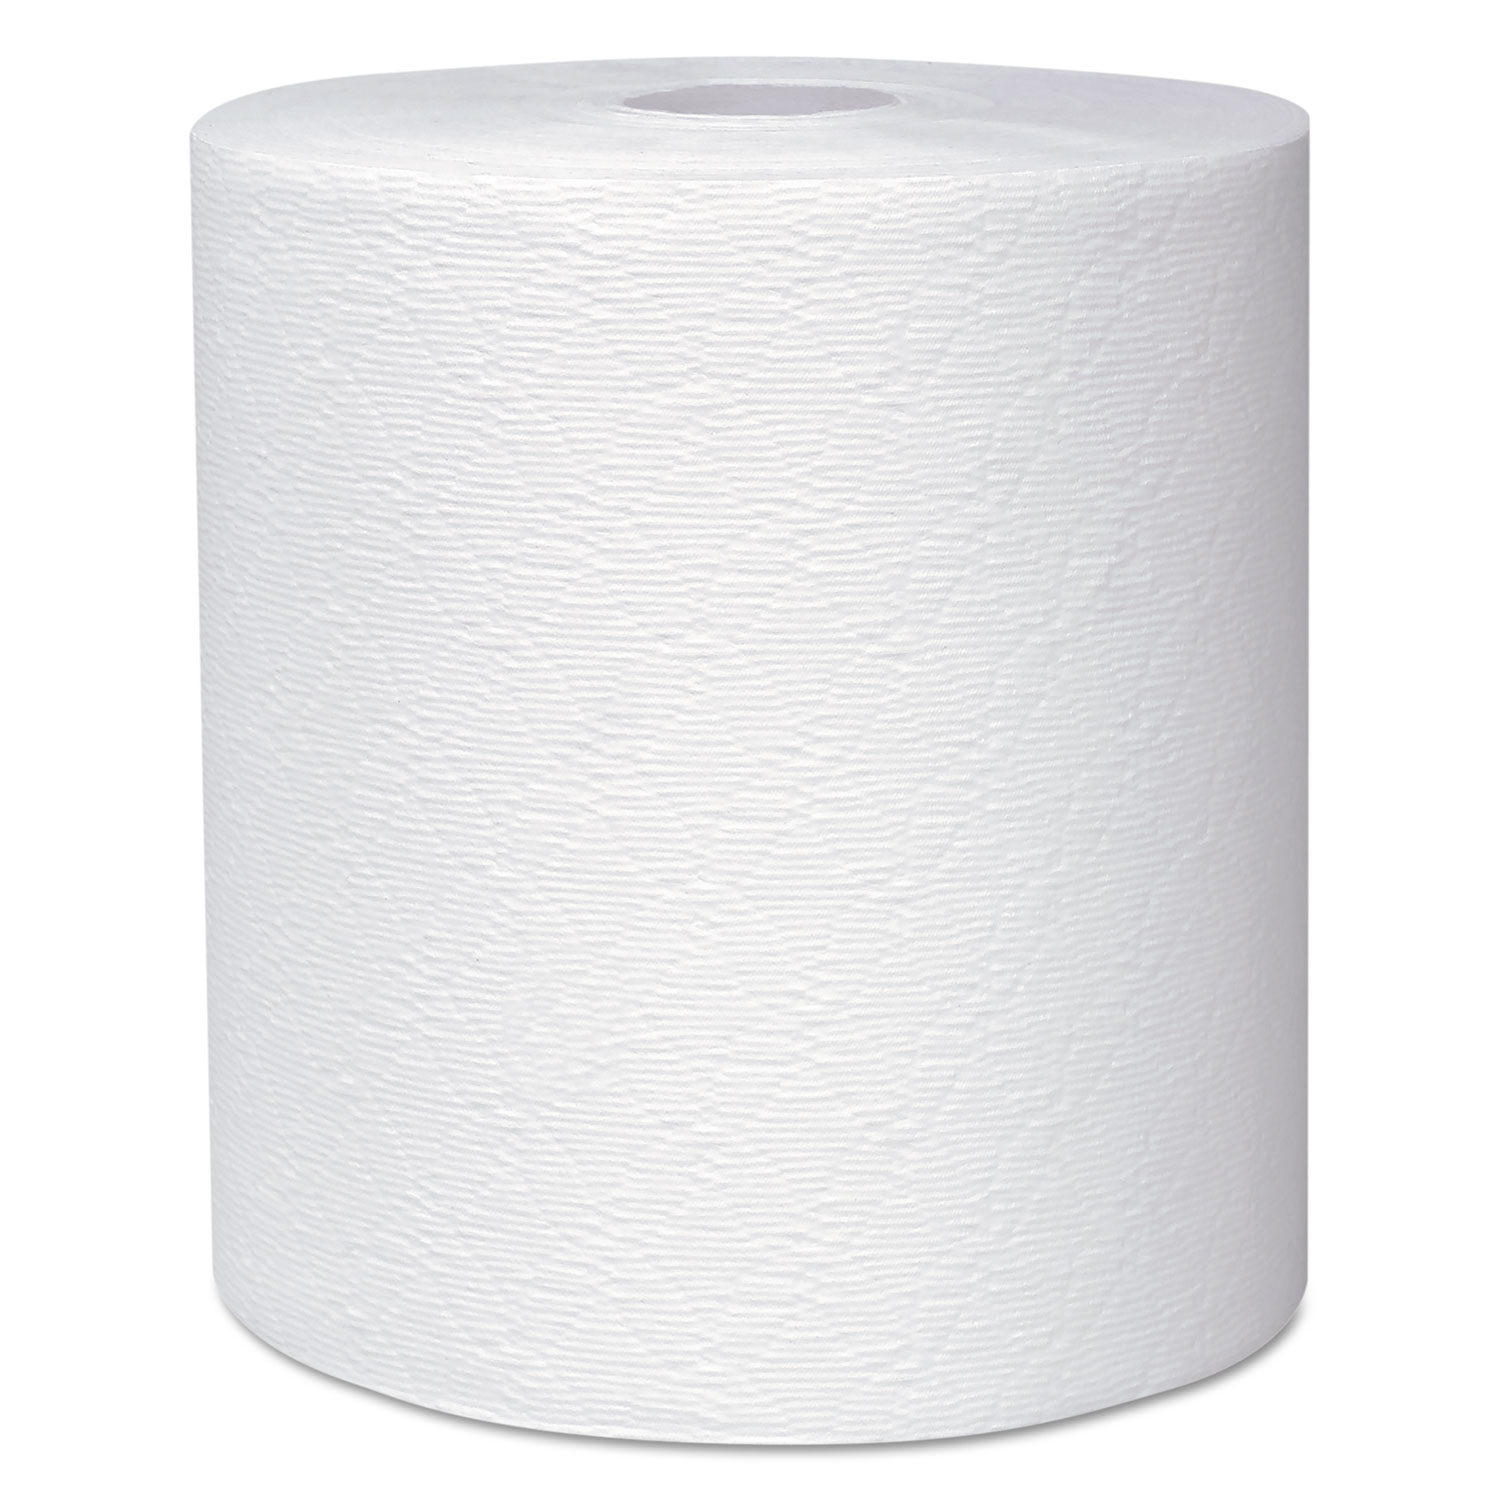 Scott Essential Plus Hard Roll Towels 8" x 600 ft, 1.75" Core dia, White, 6 Rolls/CT - image 2 of 7